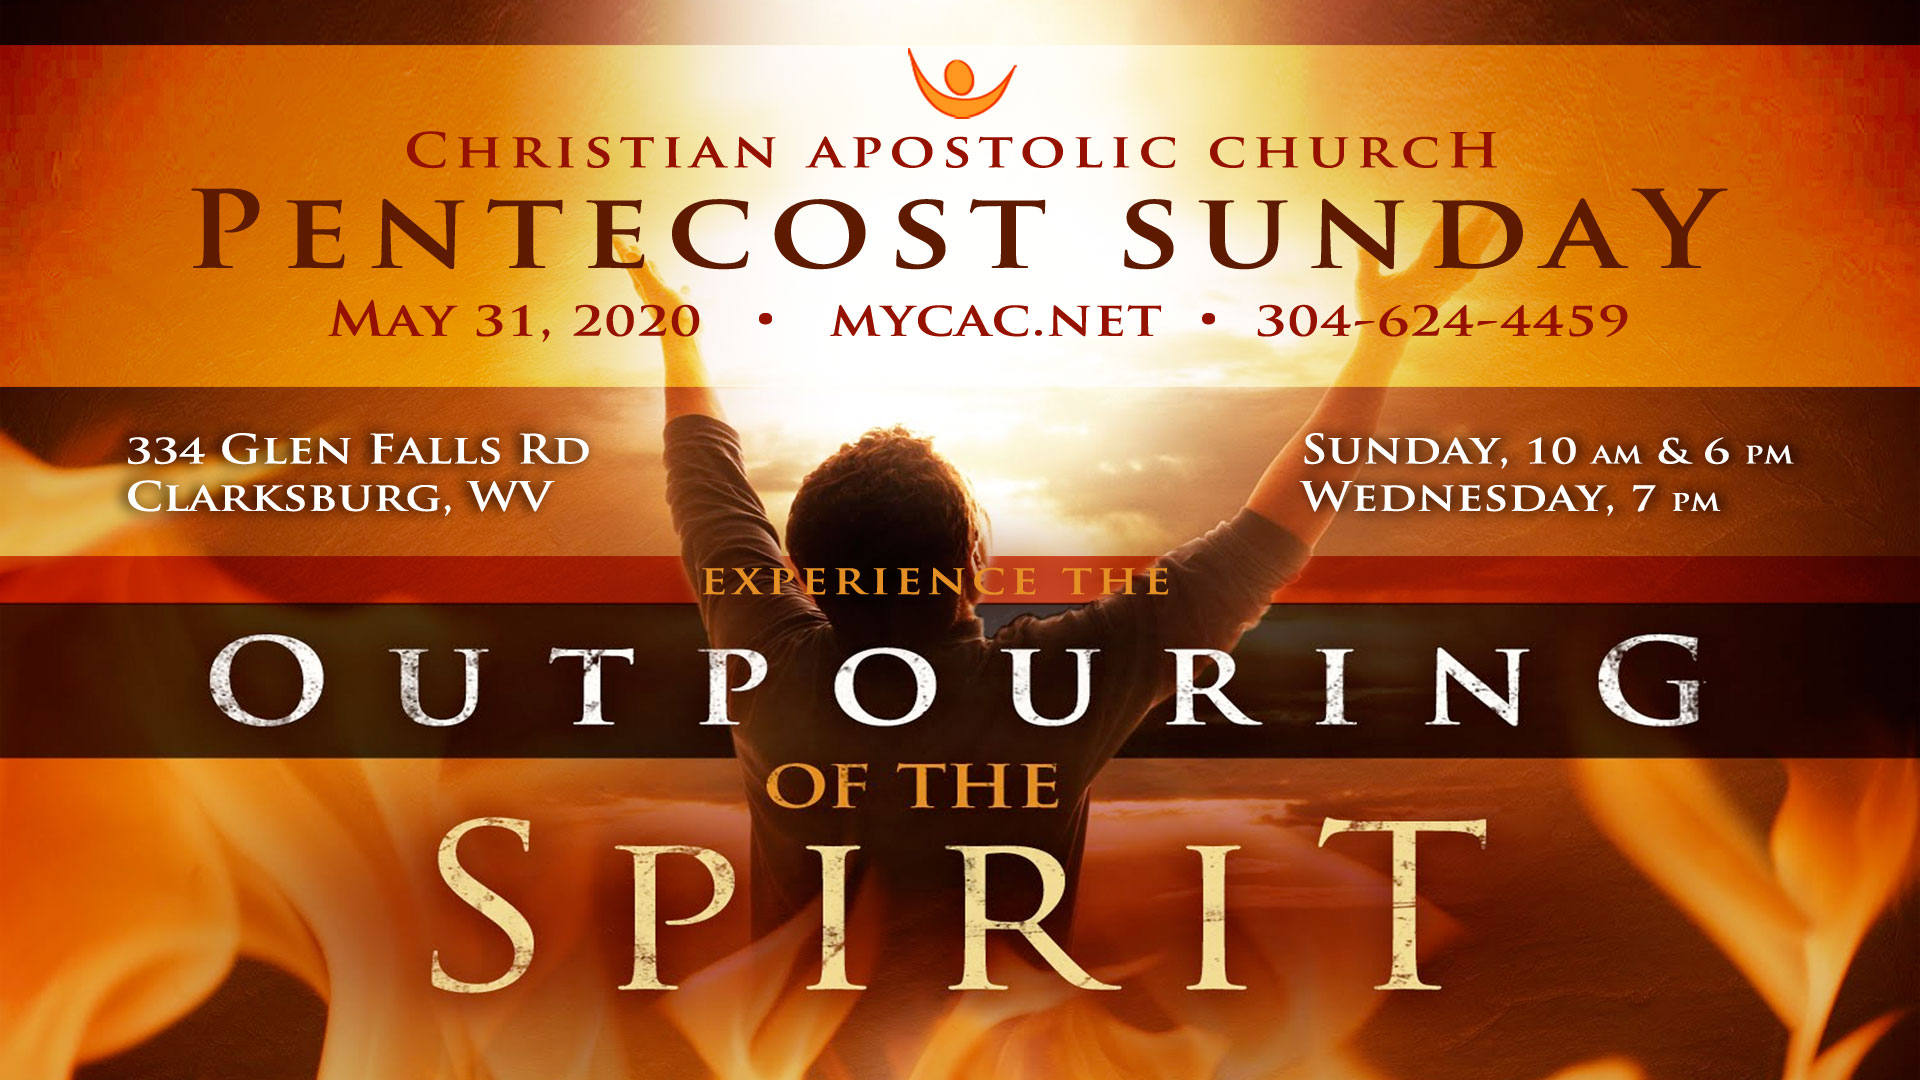 It’s Pentecost Sunday!